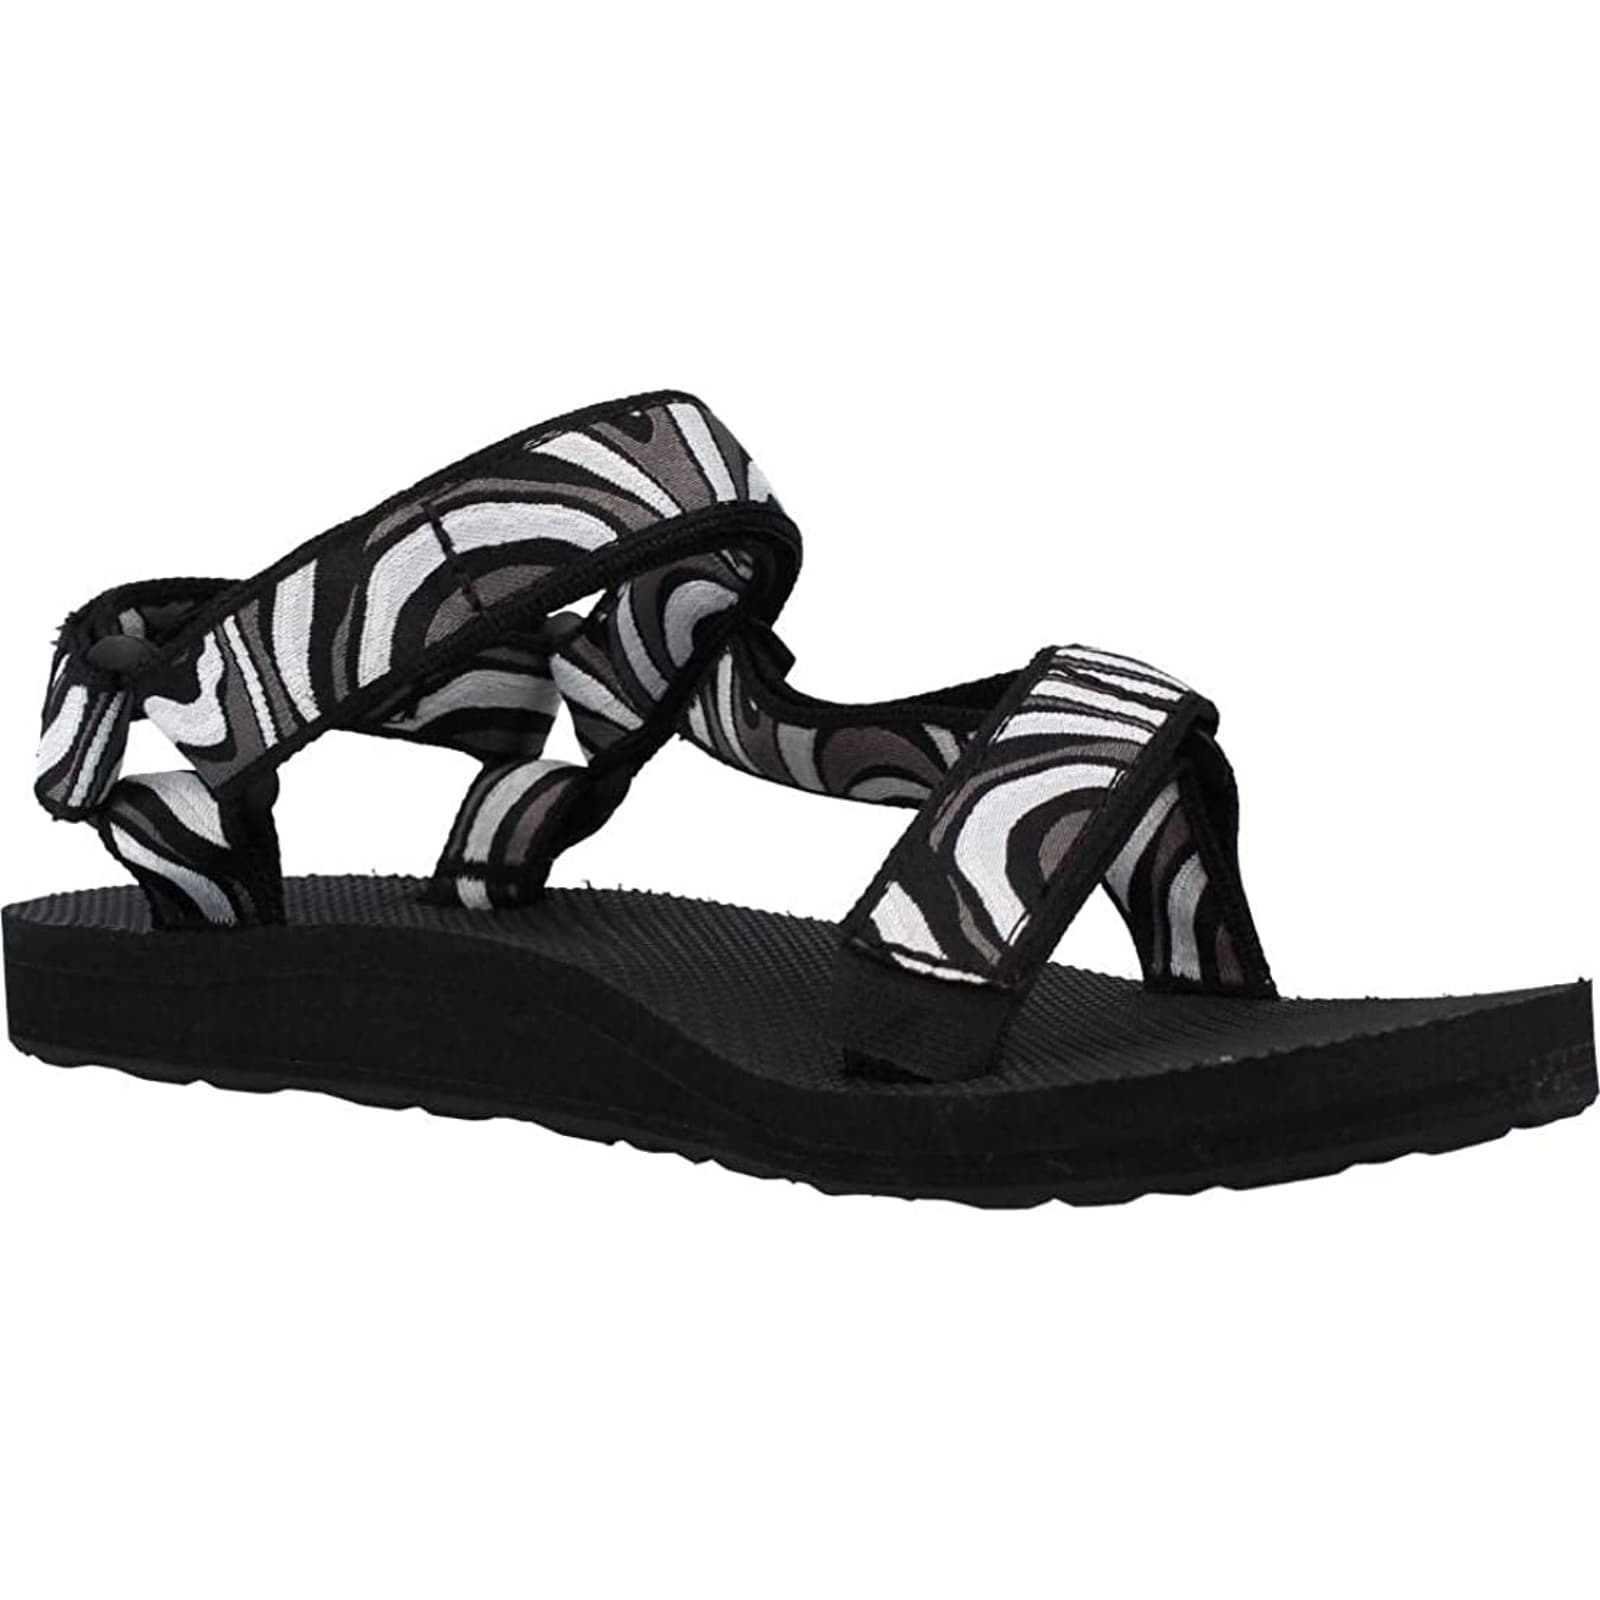 Teva Womens Original Universal Zappy Walking Sandals - Black White